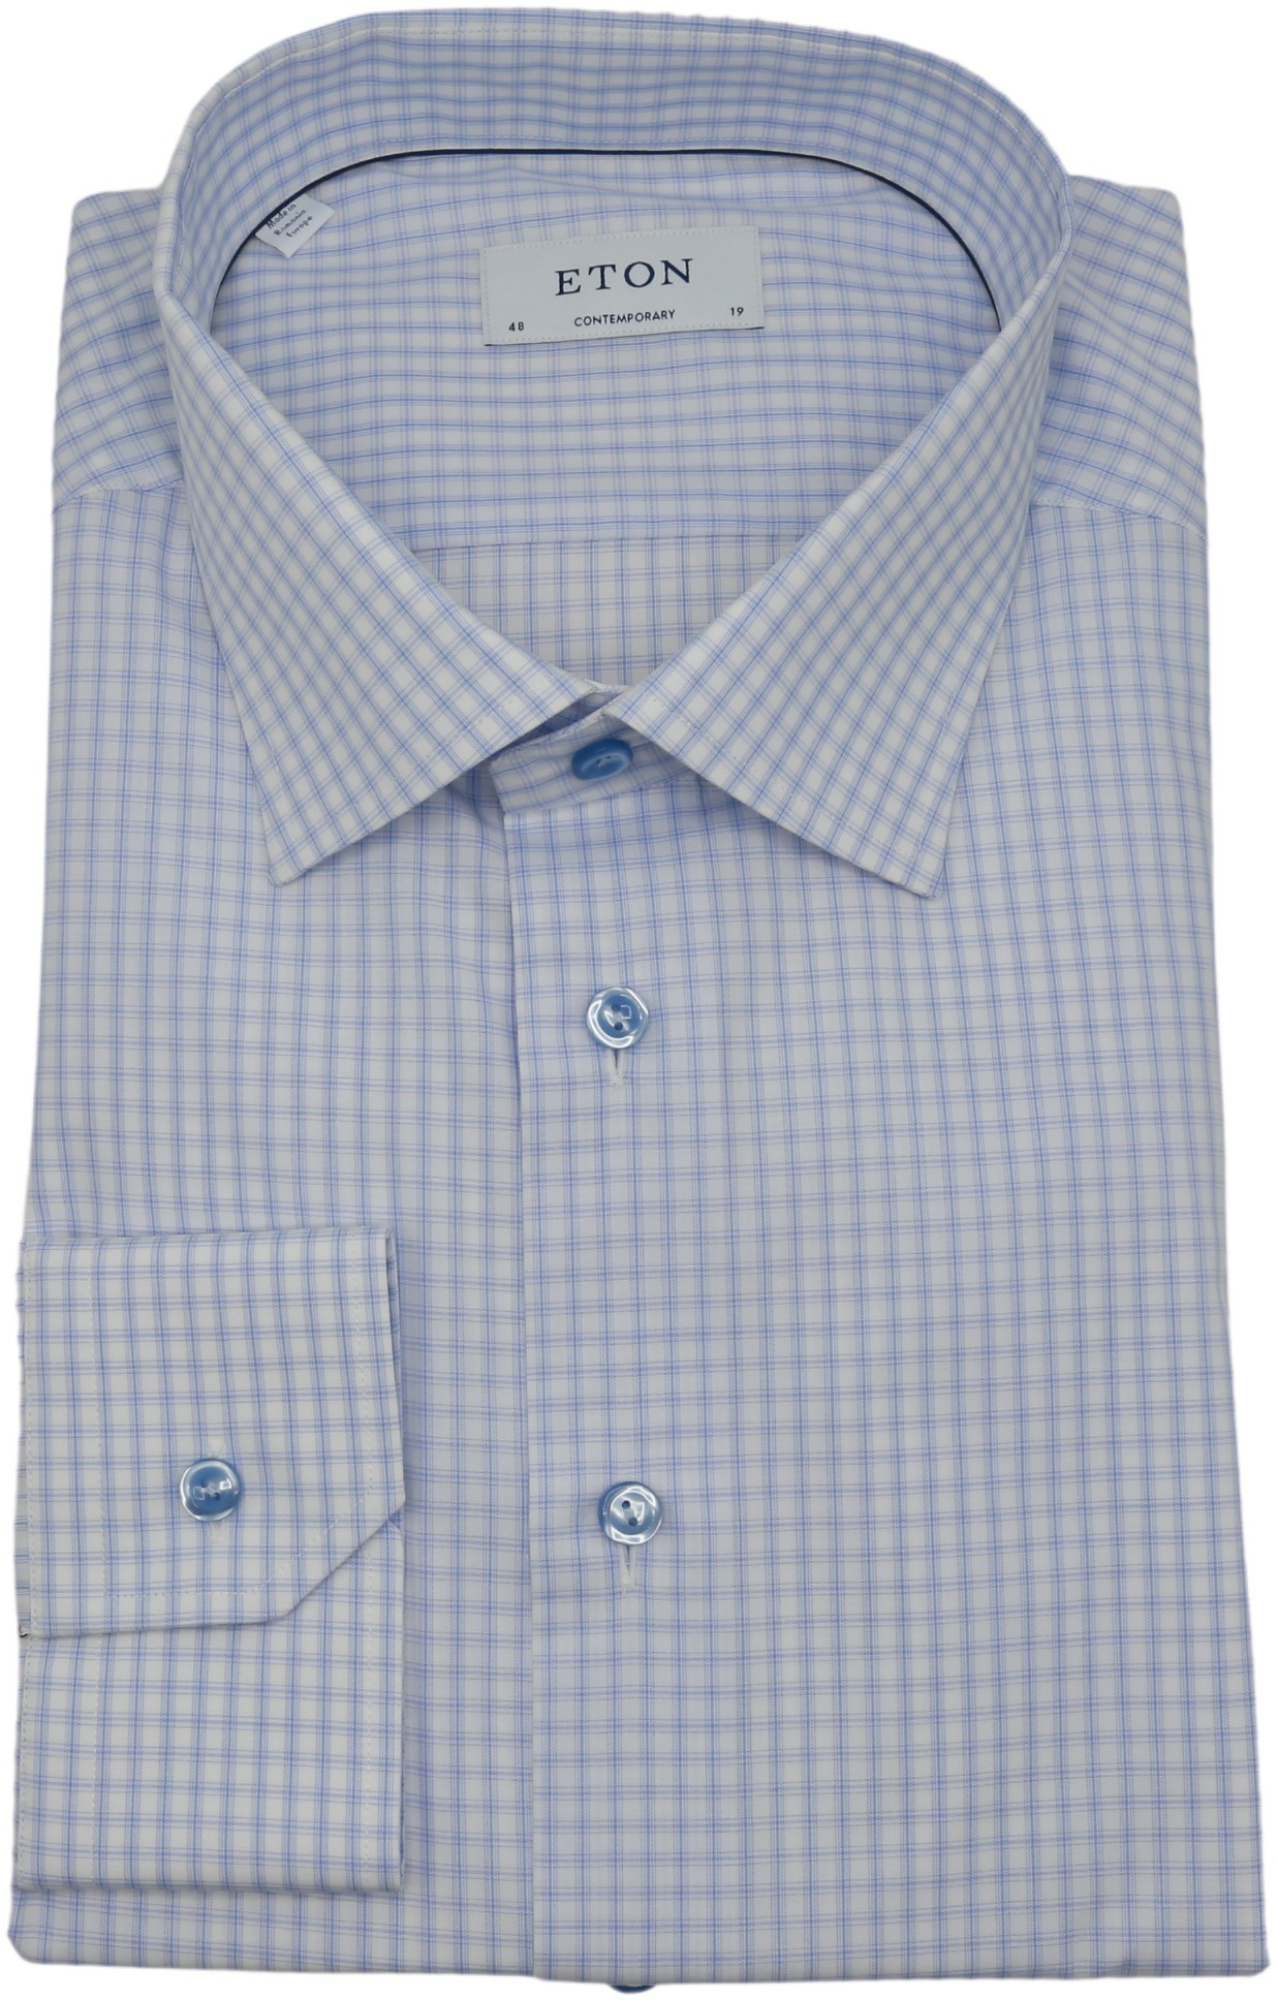 Eton Men's Blue / White Contemporary Fit Checked Dress Shirt - 48-19 (3X)